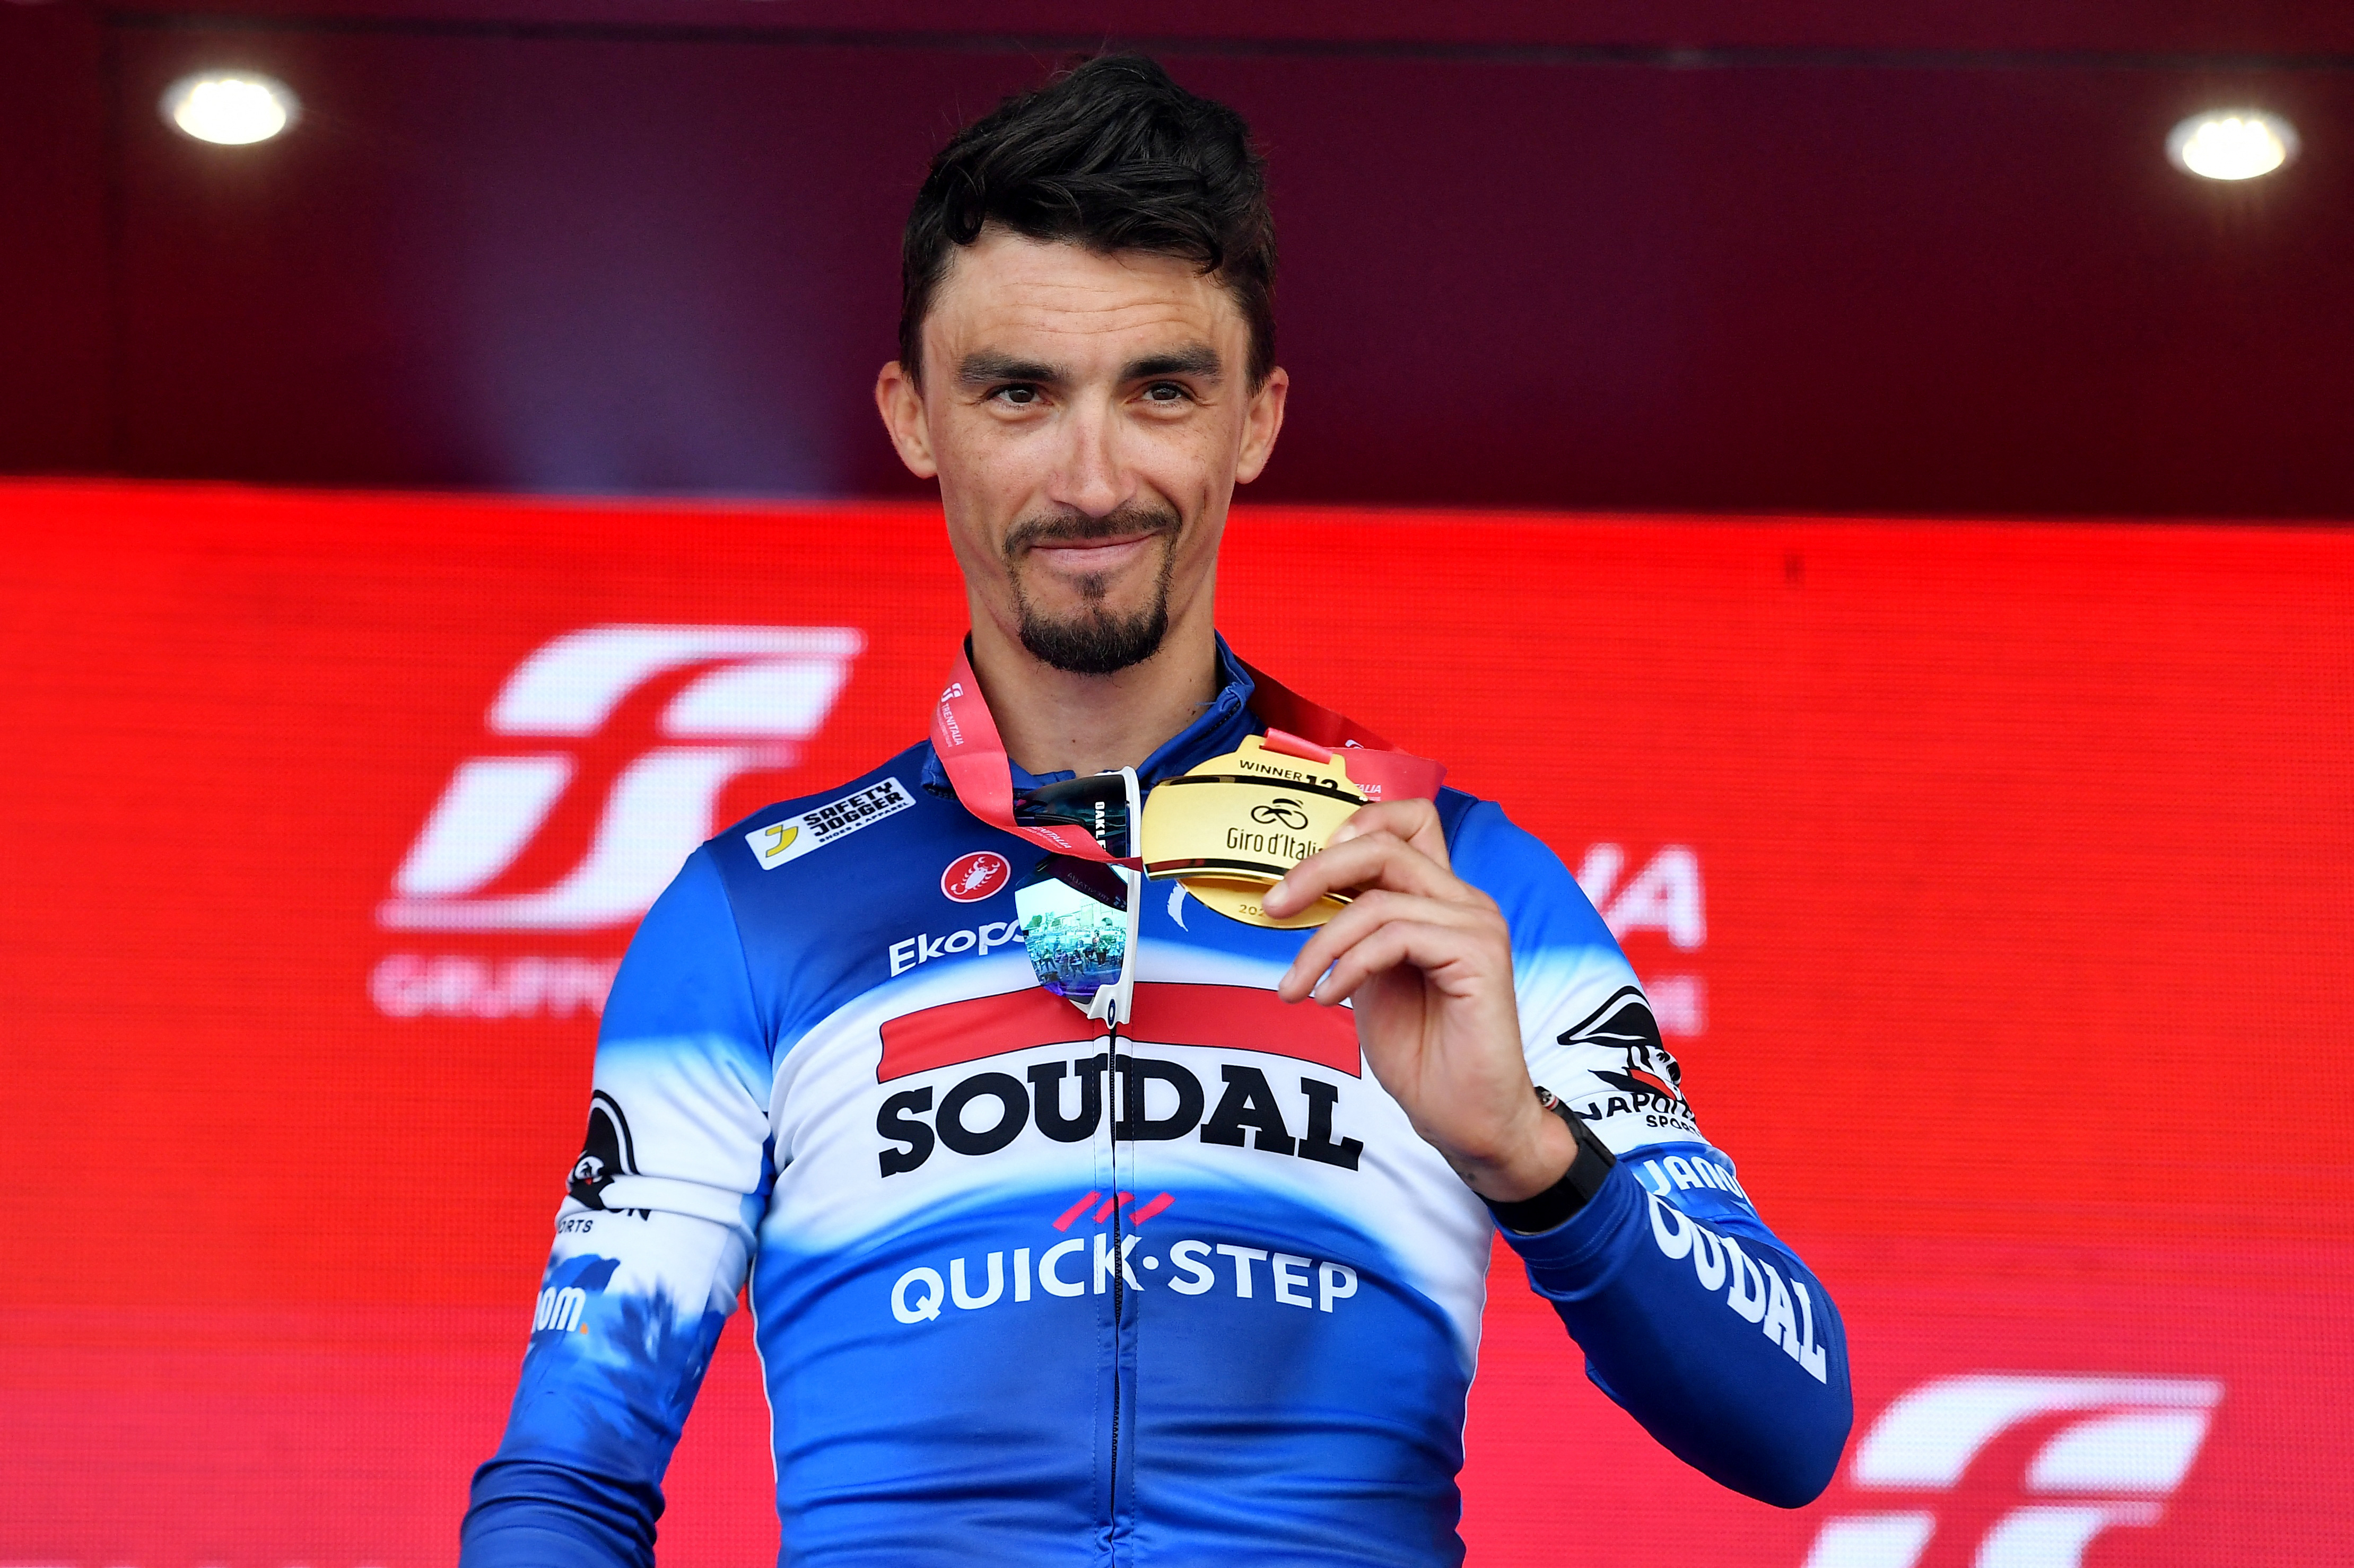 Giro d'Italia - Stage 12 - Martinsicuro to Fano